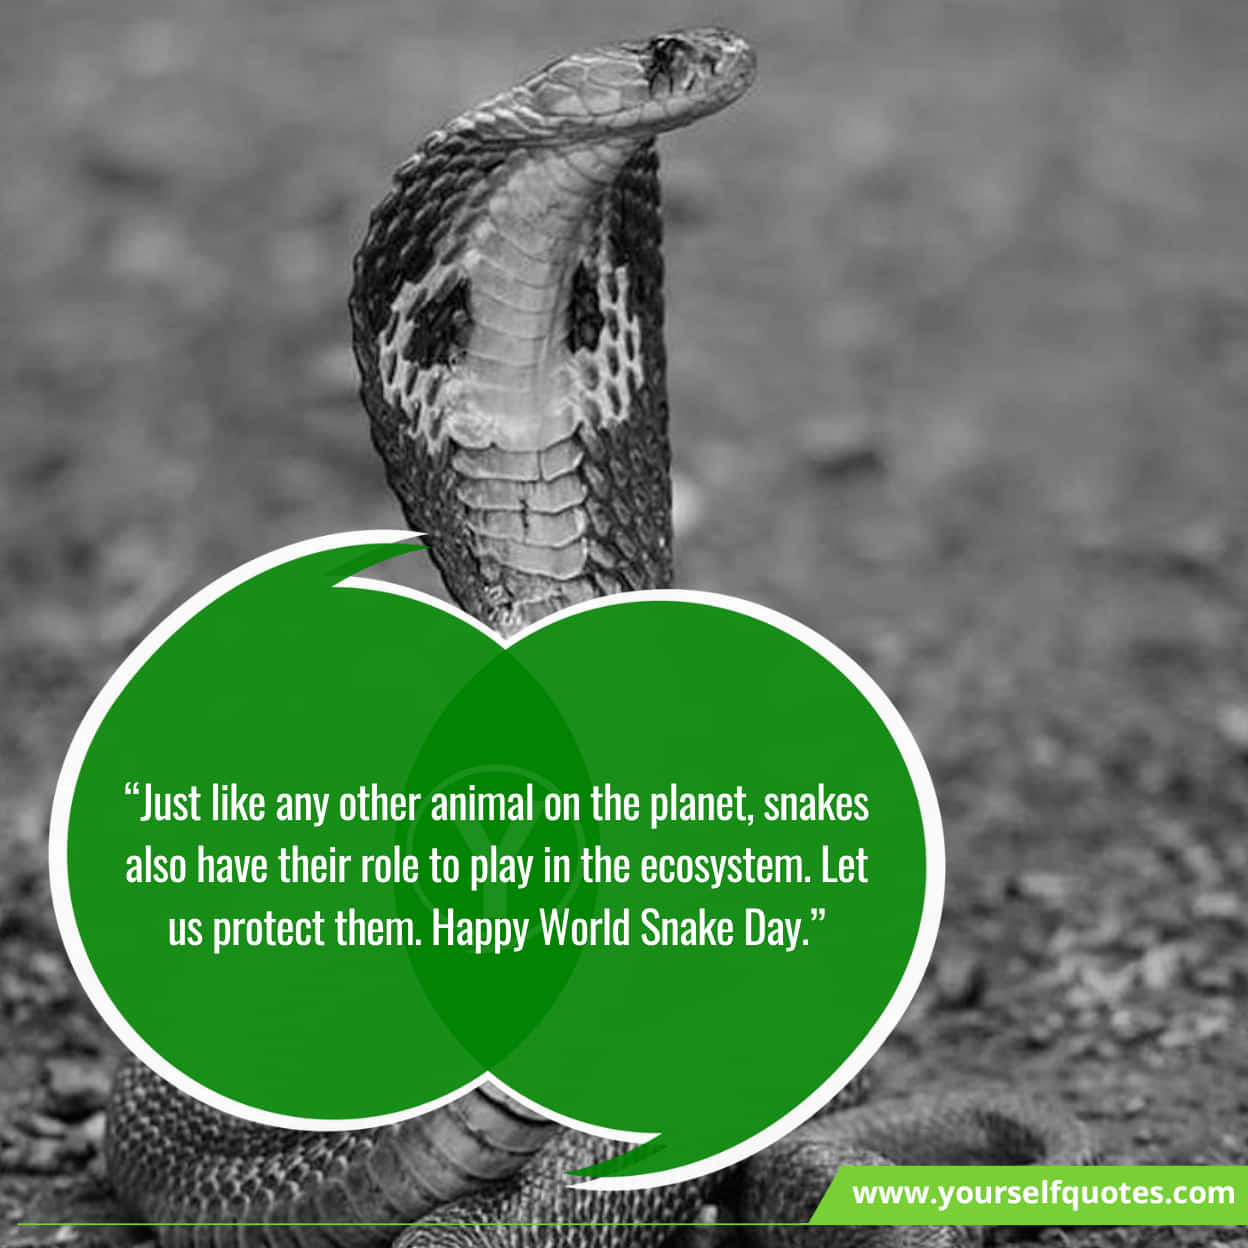 World Snake Day Best Sayings & Greetings